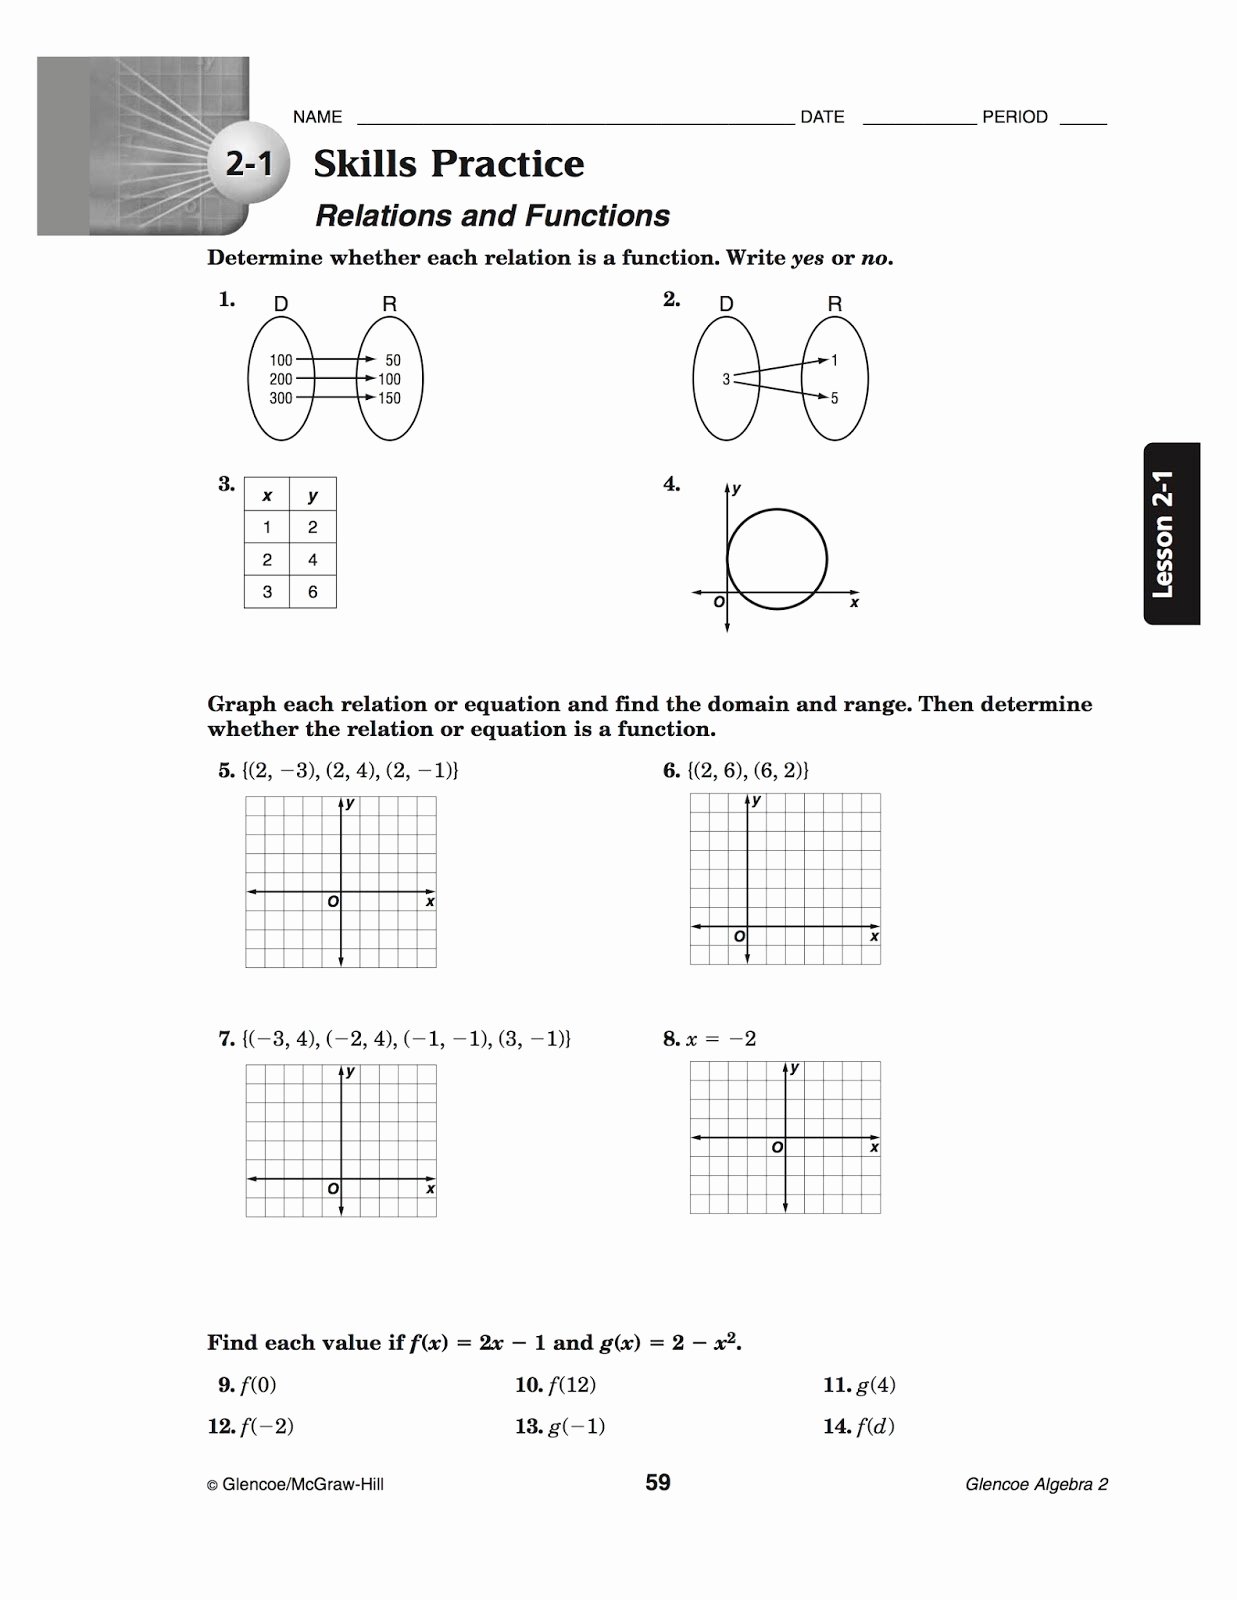 Functions and Relations Worksheet Luxury Bacs Algebra 2